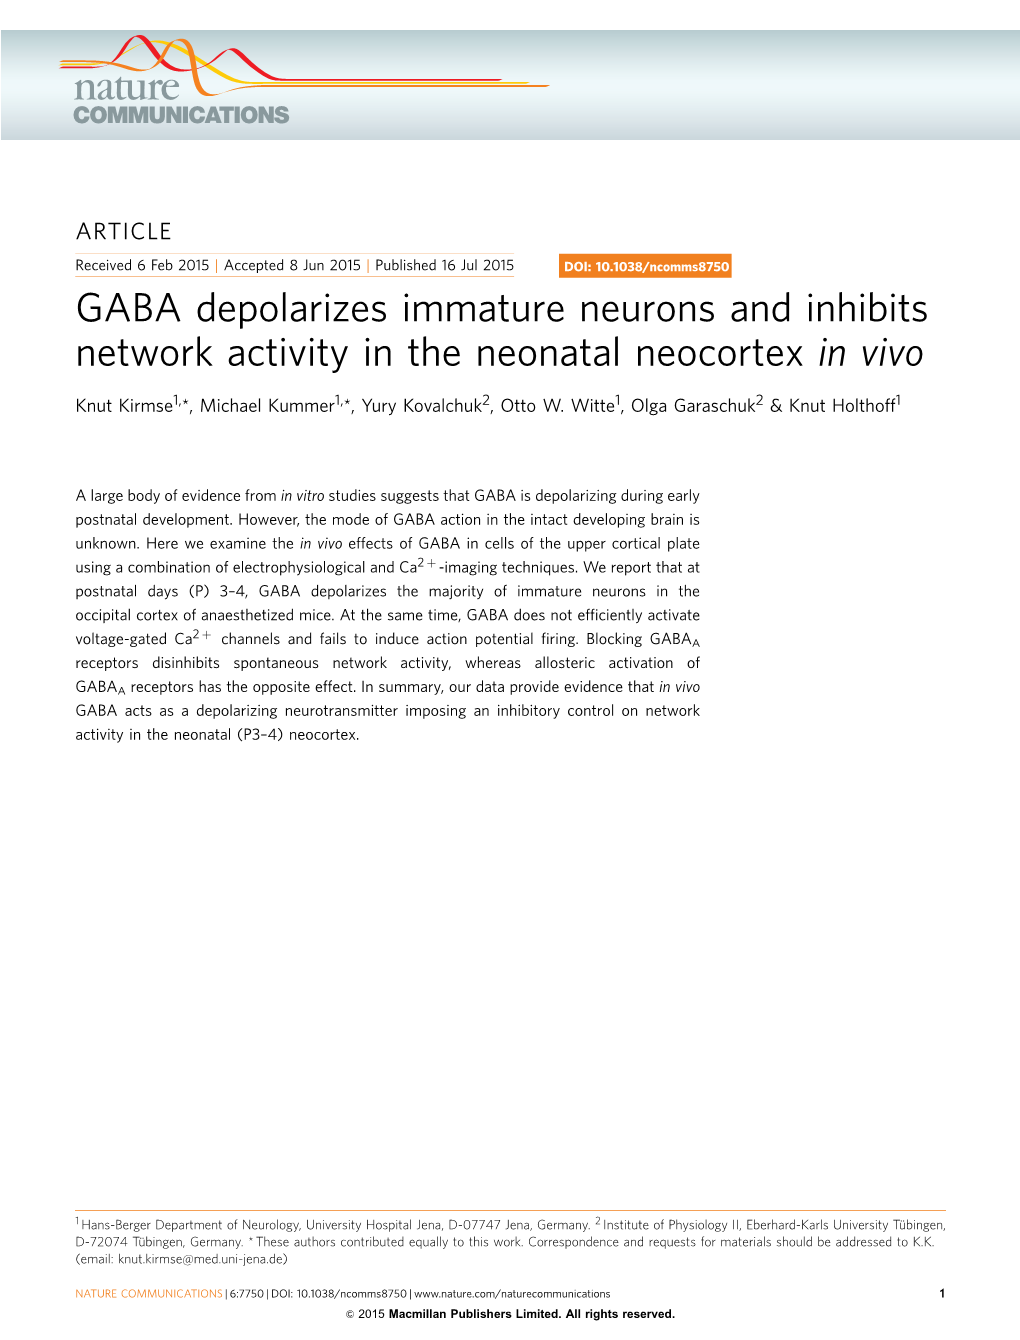 GABA Depolarizes Immature Neurons and Inhibits Network Activity in the Neonatal Neocortex in Vivo